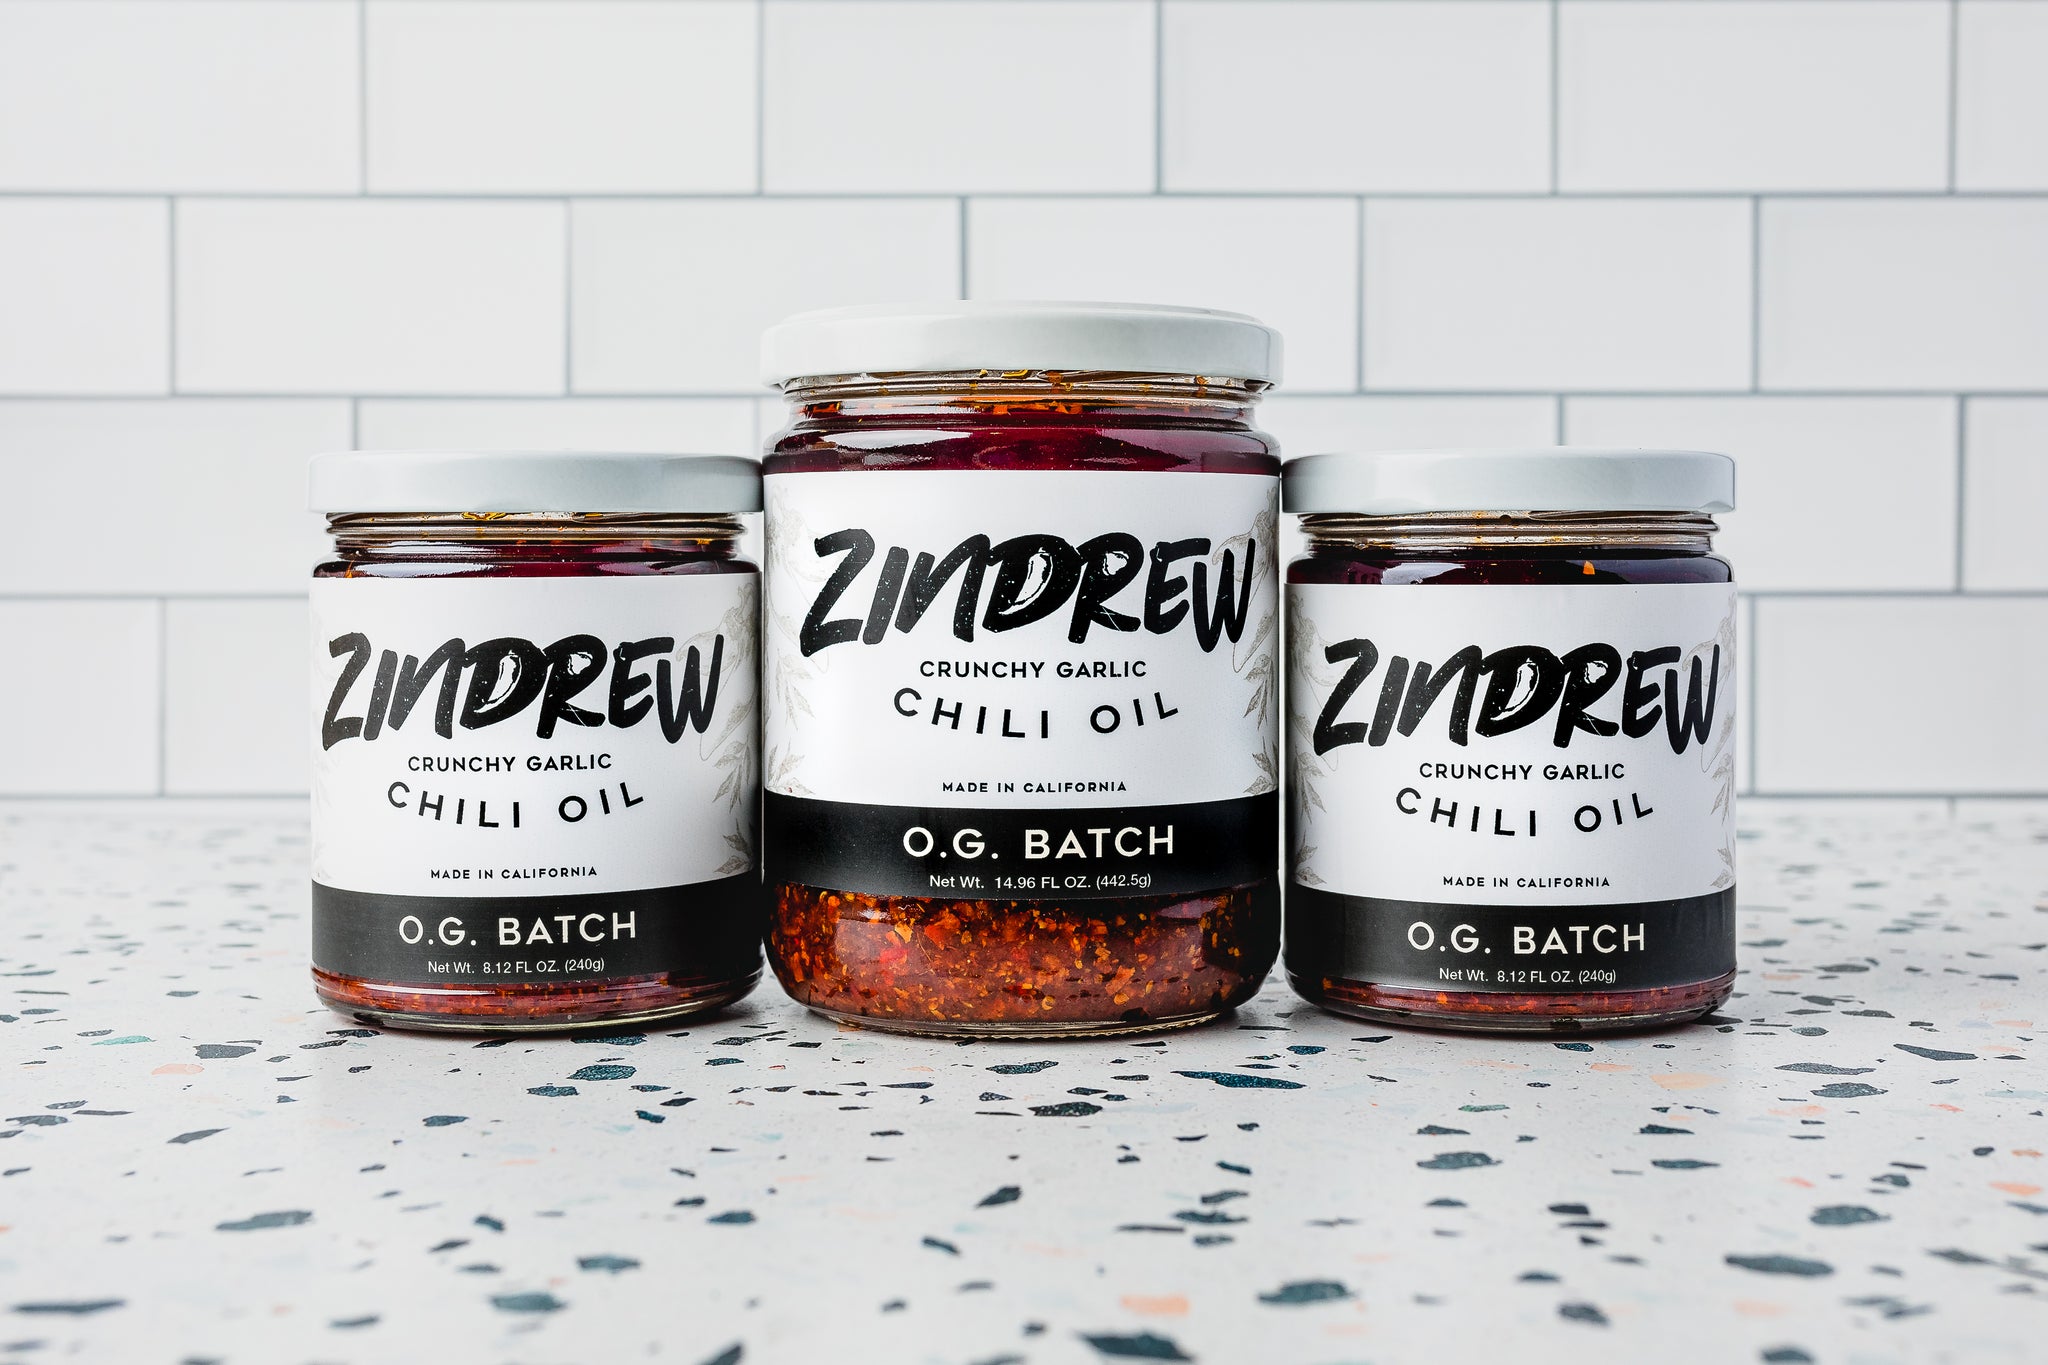 Zindrew Crunchy Garlic Chili Oil - OG Batch